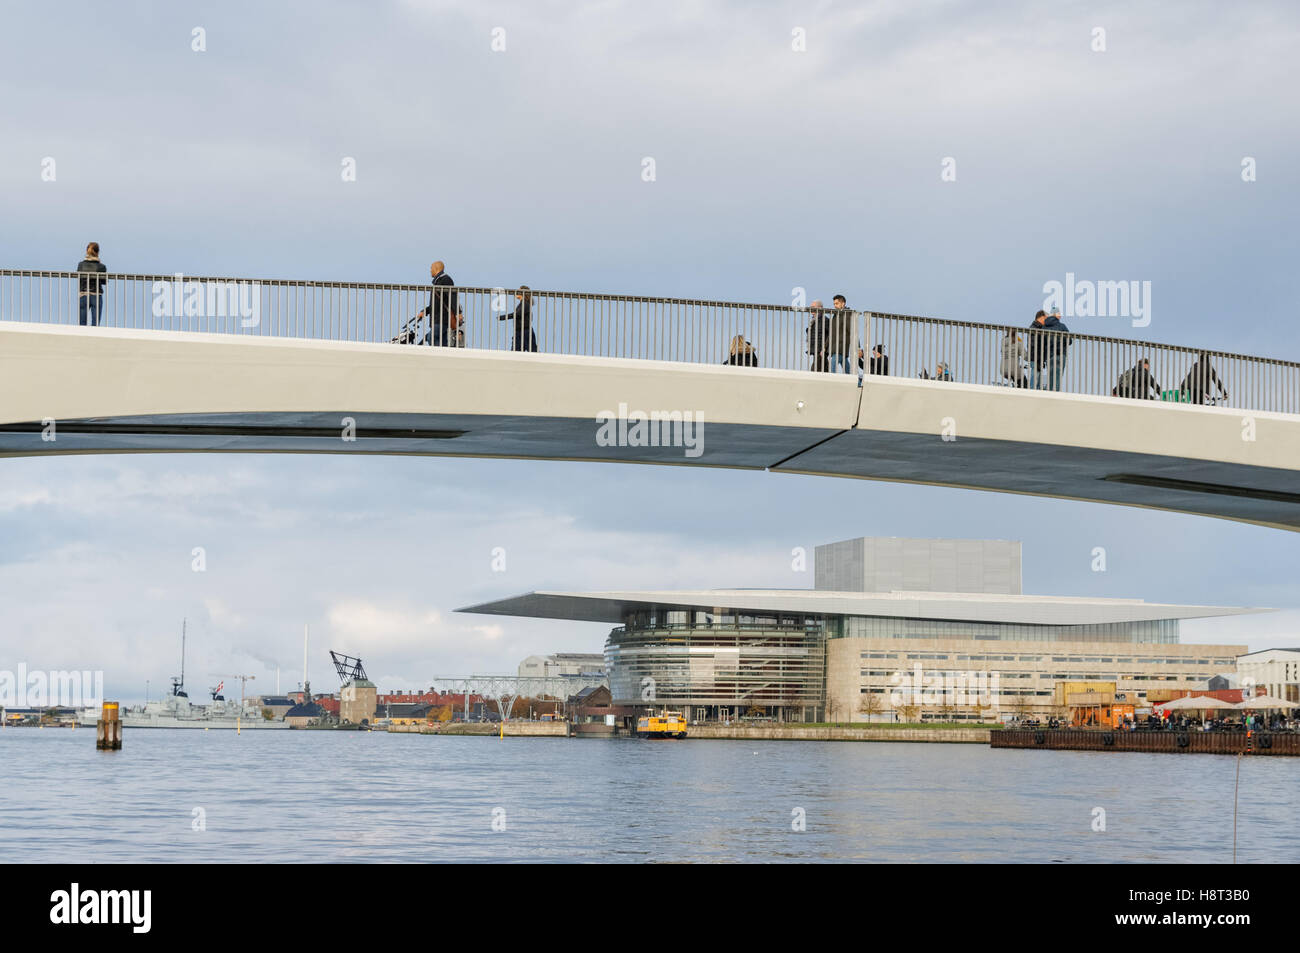 People on Inderhavnsbroen pedestrian and cyclist bridge with Copenhagen Opera House Operaen in the background, Copenhagen, Denmark Stock Photo